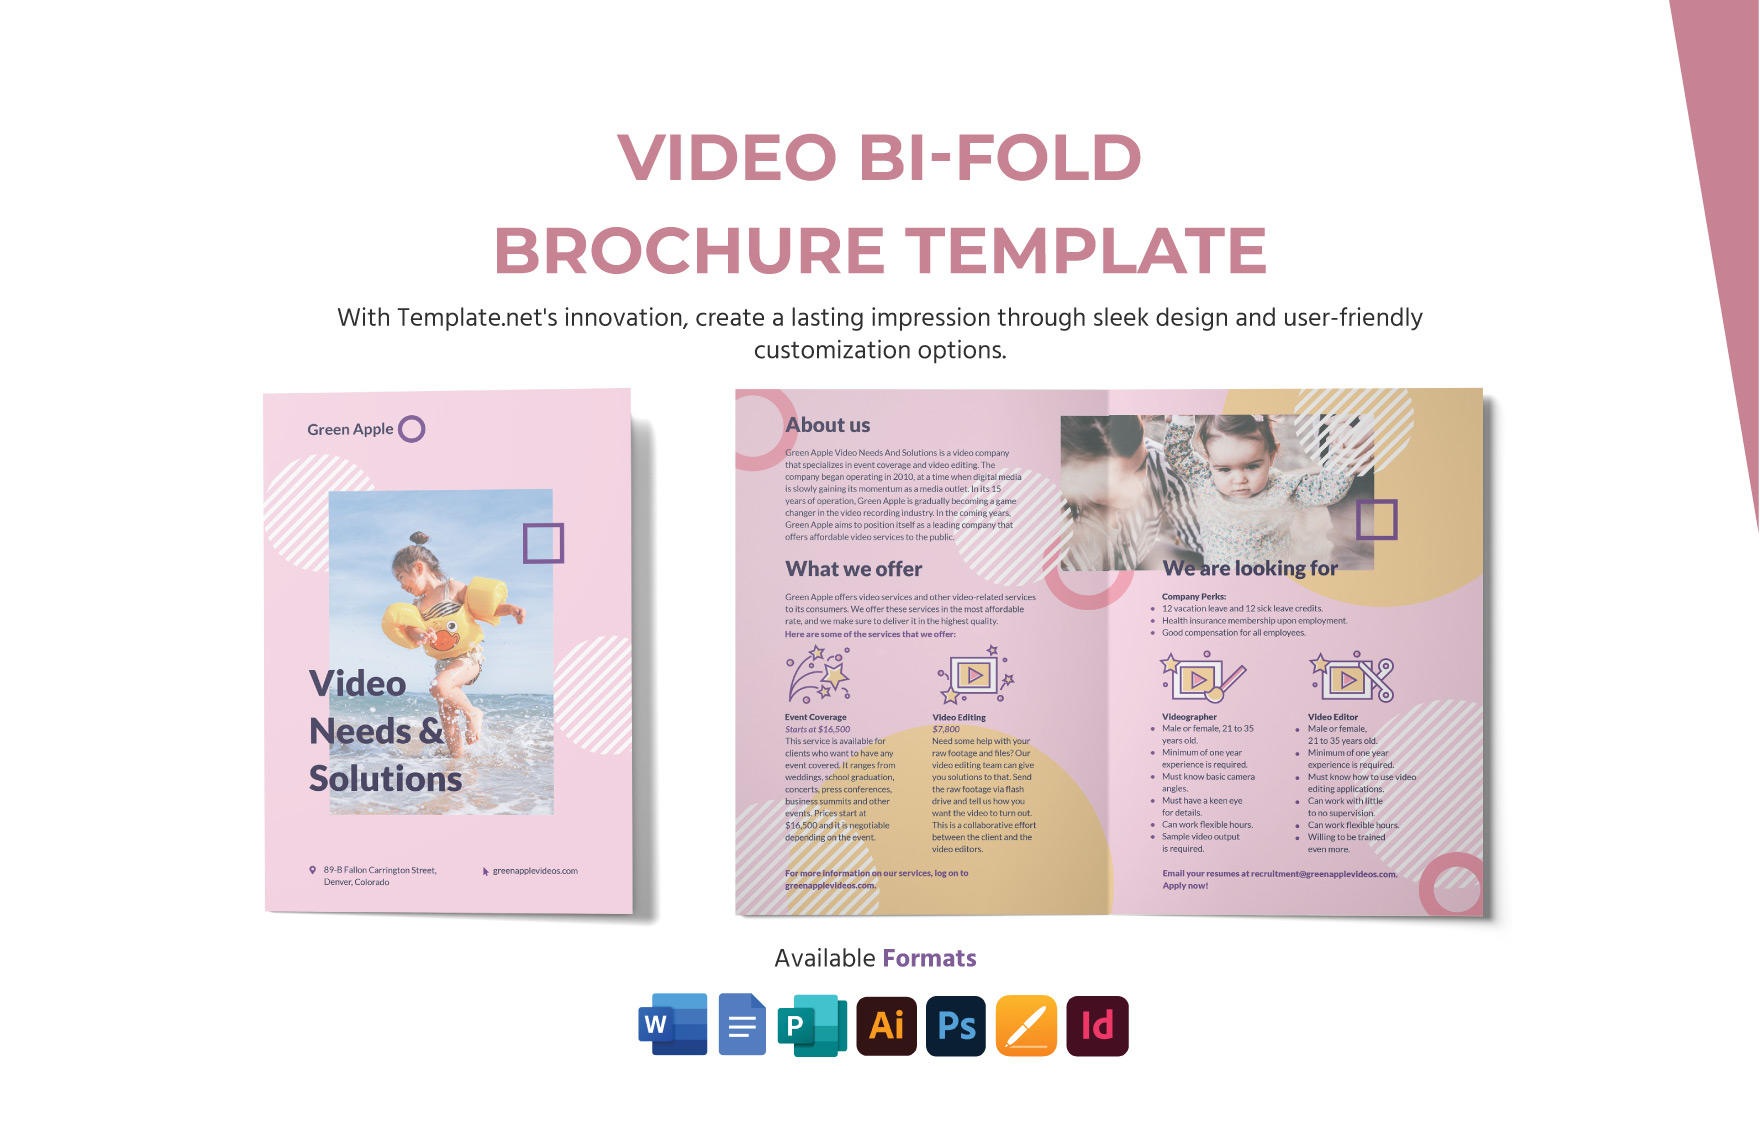 Video Bi-Fold Brochure Template in Word, Google Docs, Illustrator, PSD, Apple Pages, Publisher, InDesign